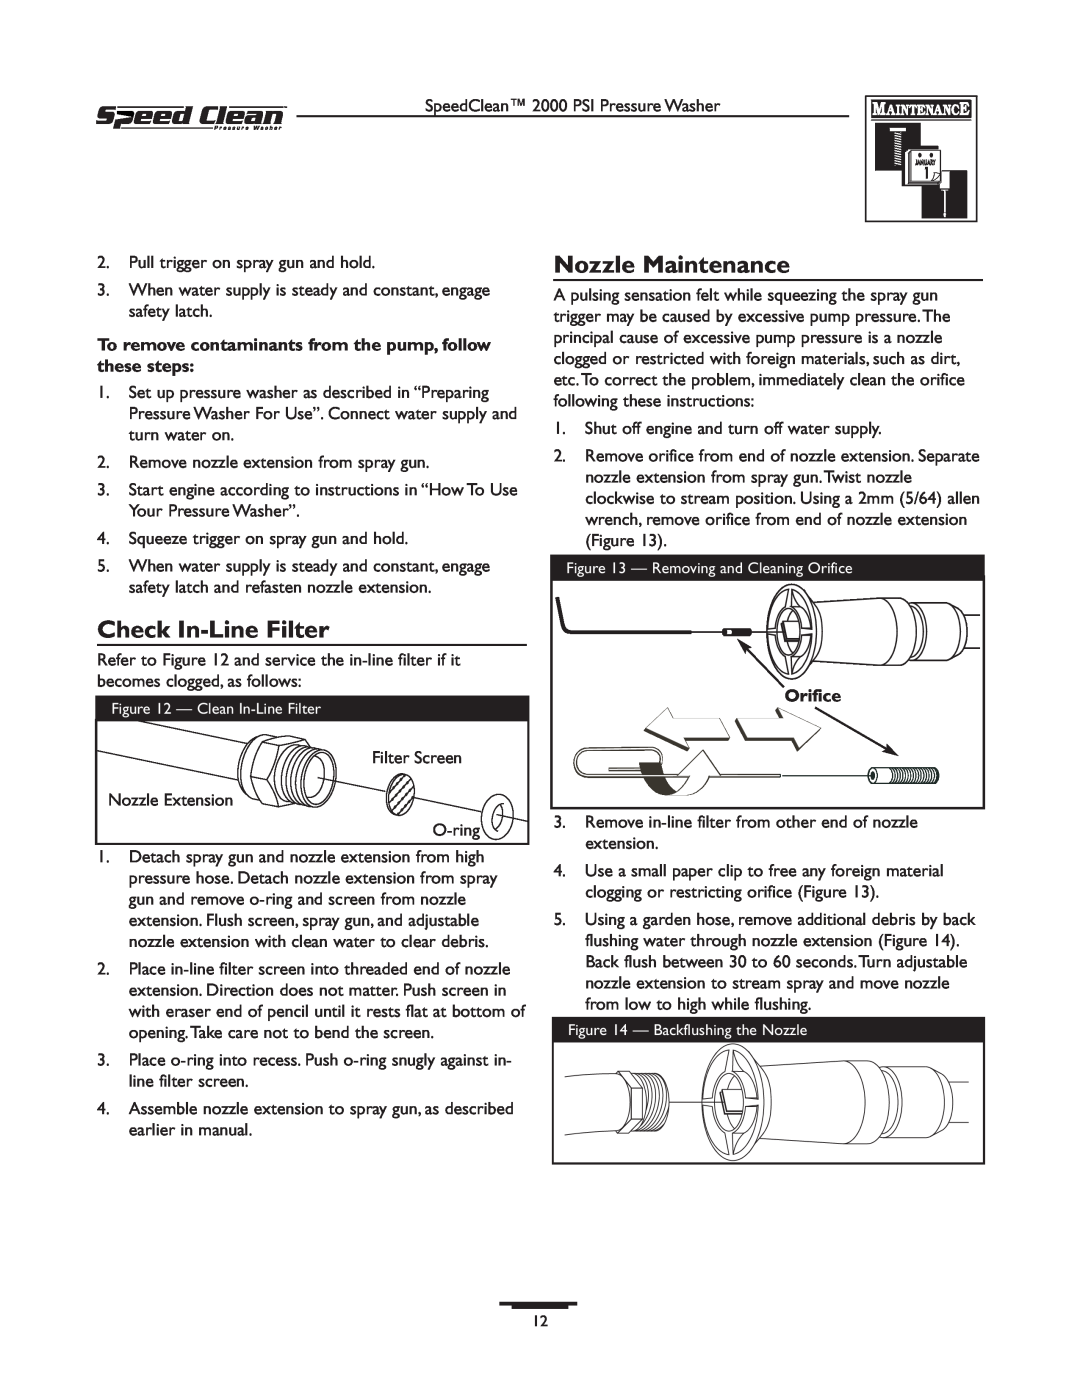 Briggs & Stratton 020211-0 owner manual Nozzle Maintenance, Check In-LineFilter, Orifice 